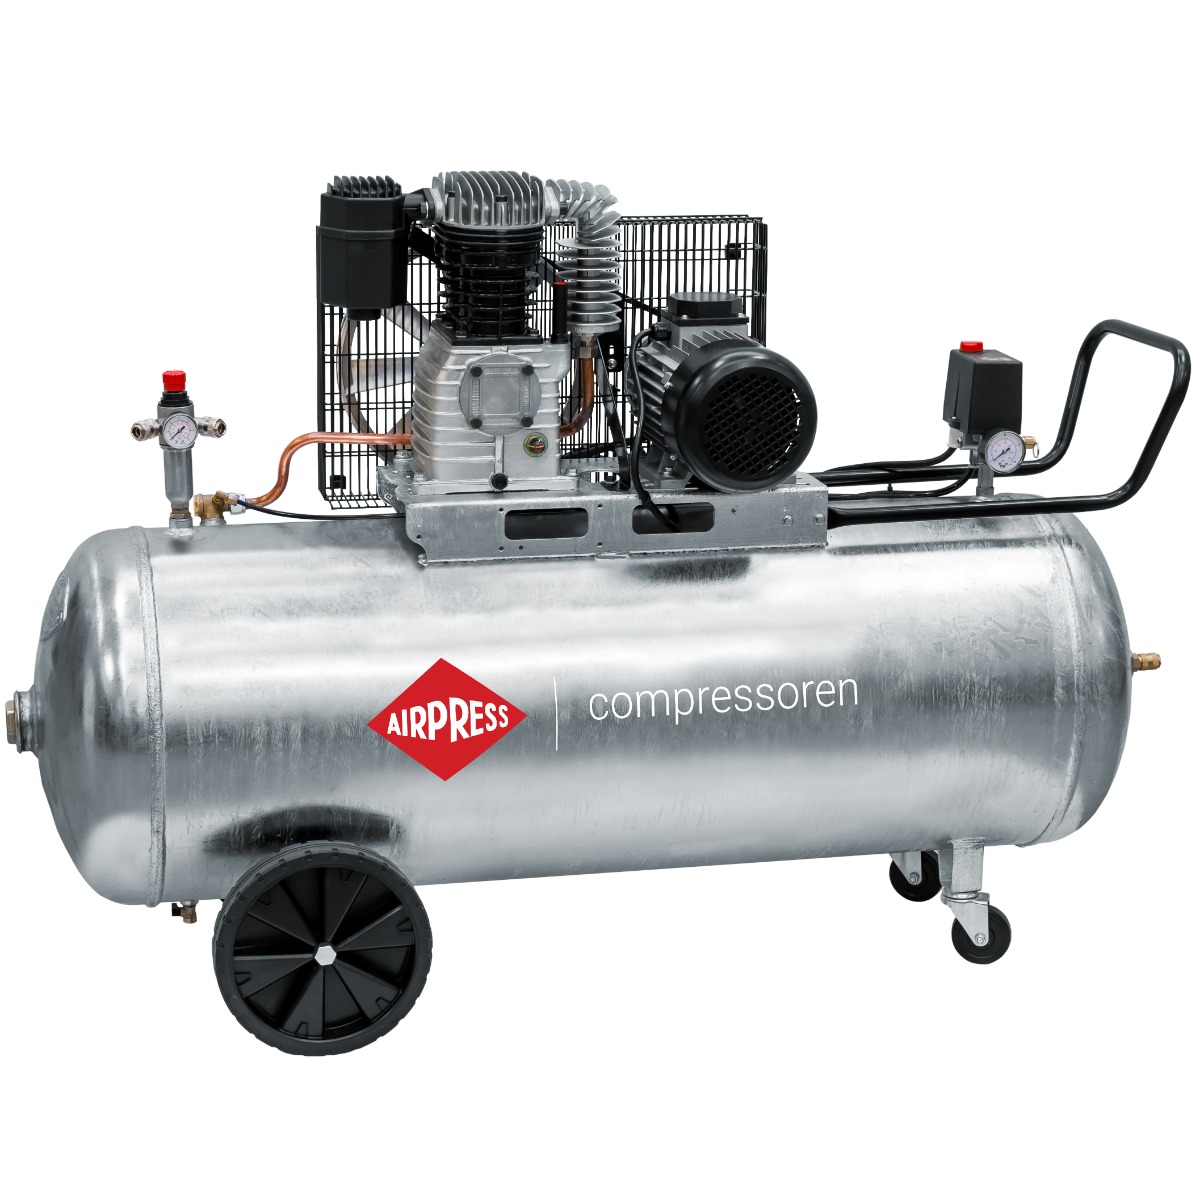 G 600-200 Pro compressor